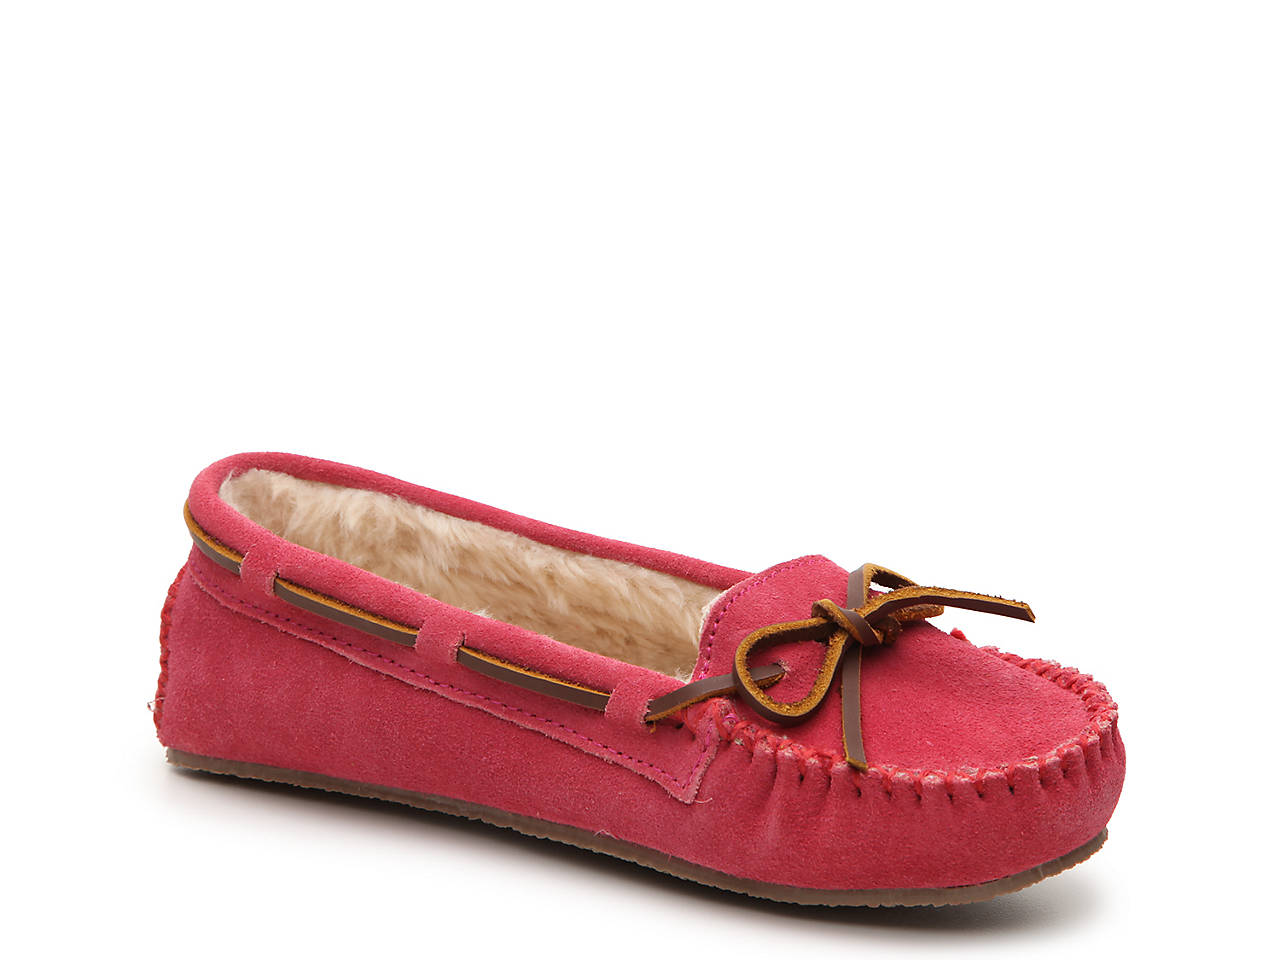 Image result for minnetonka slippers cally